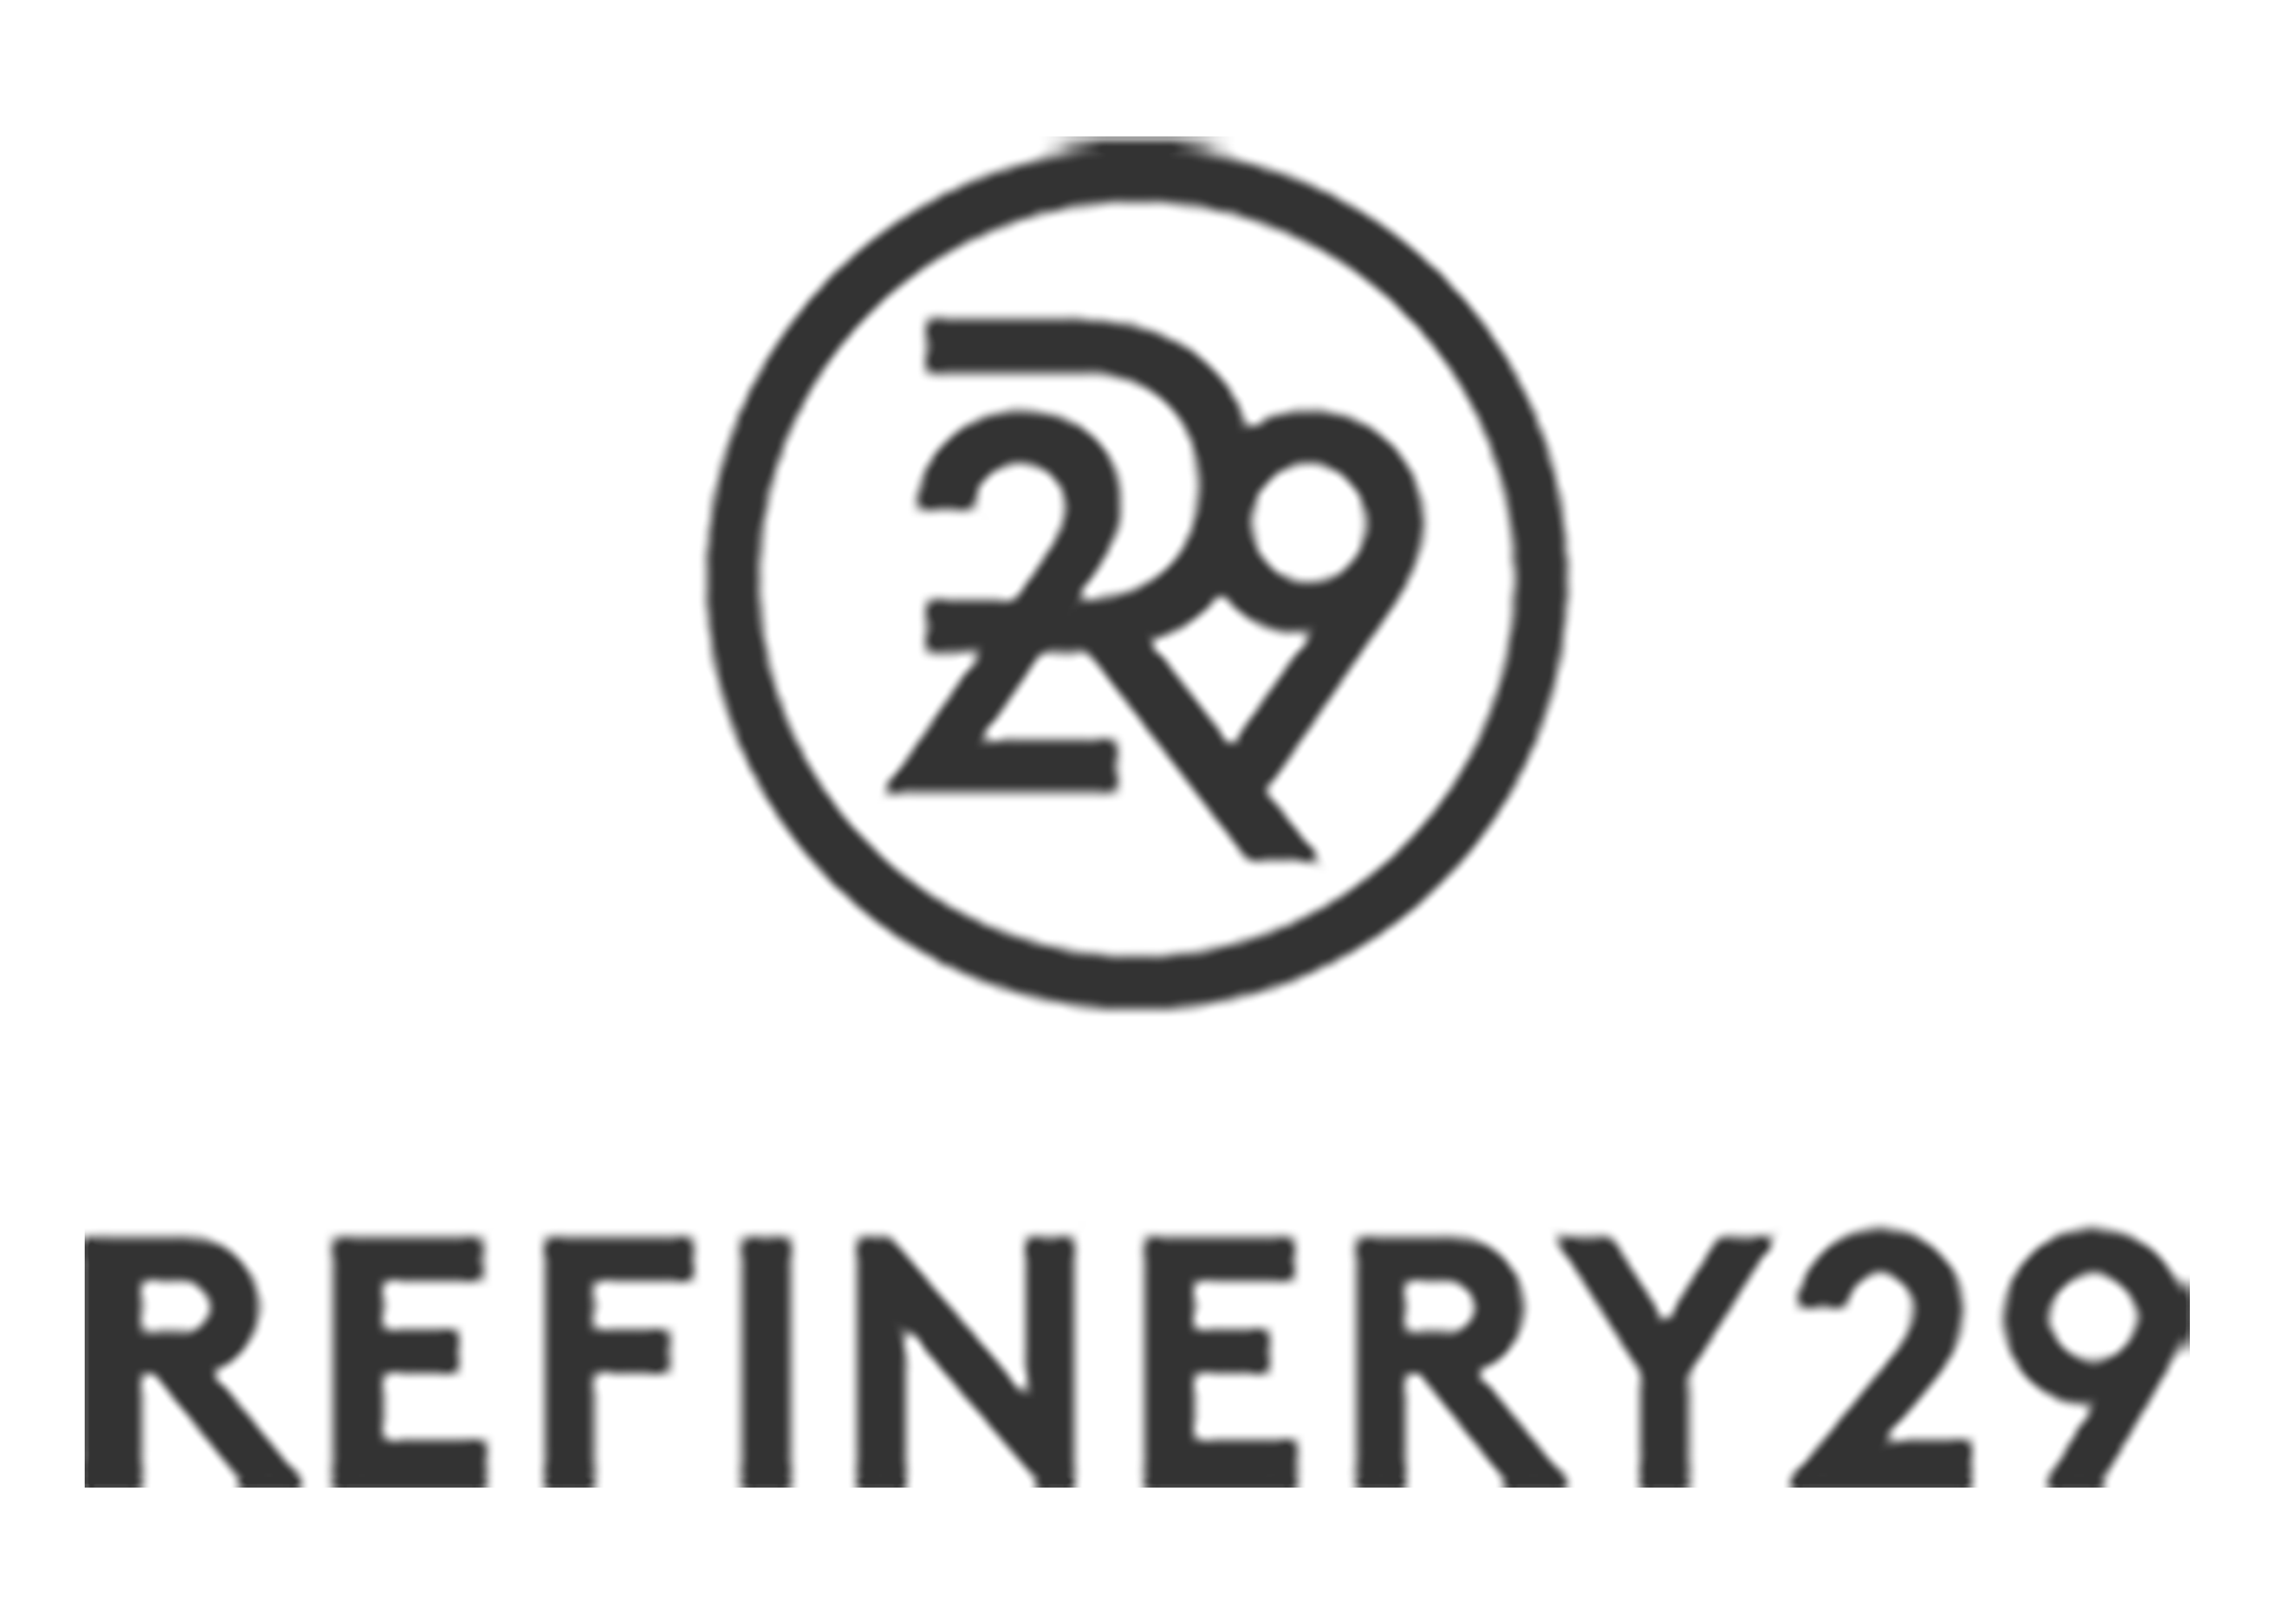 refinaery29